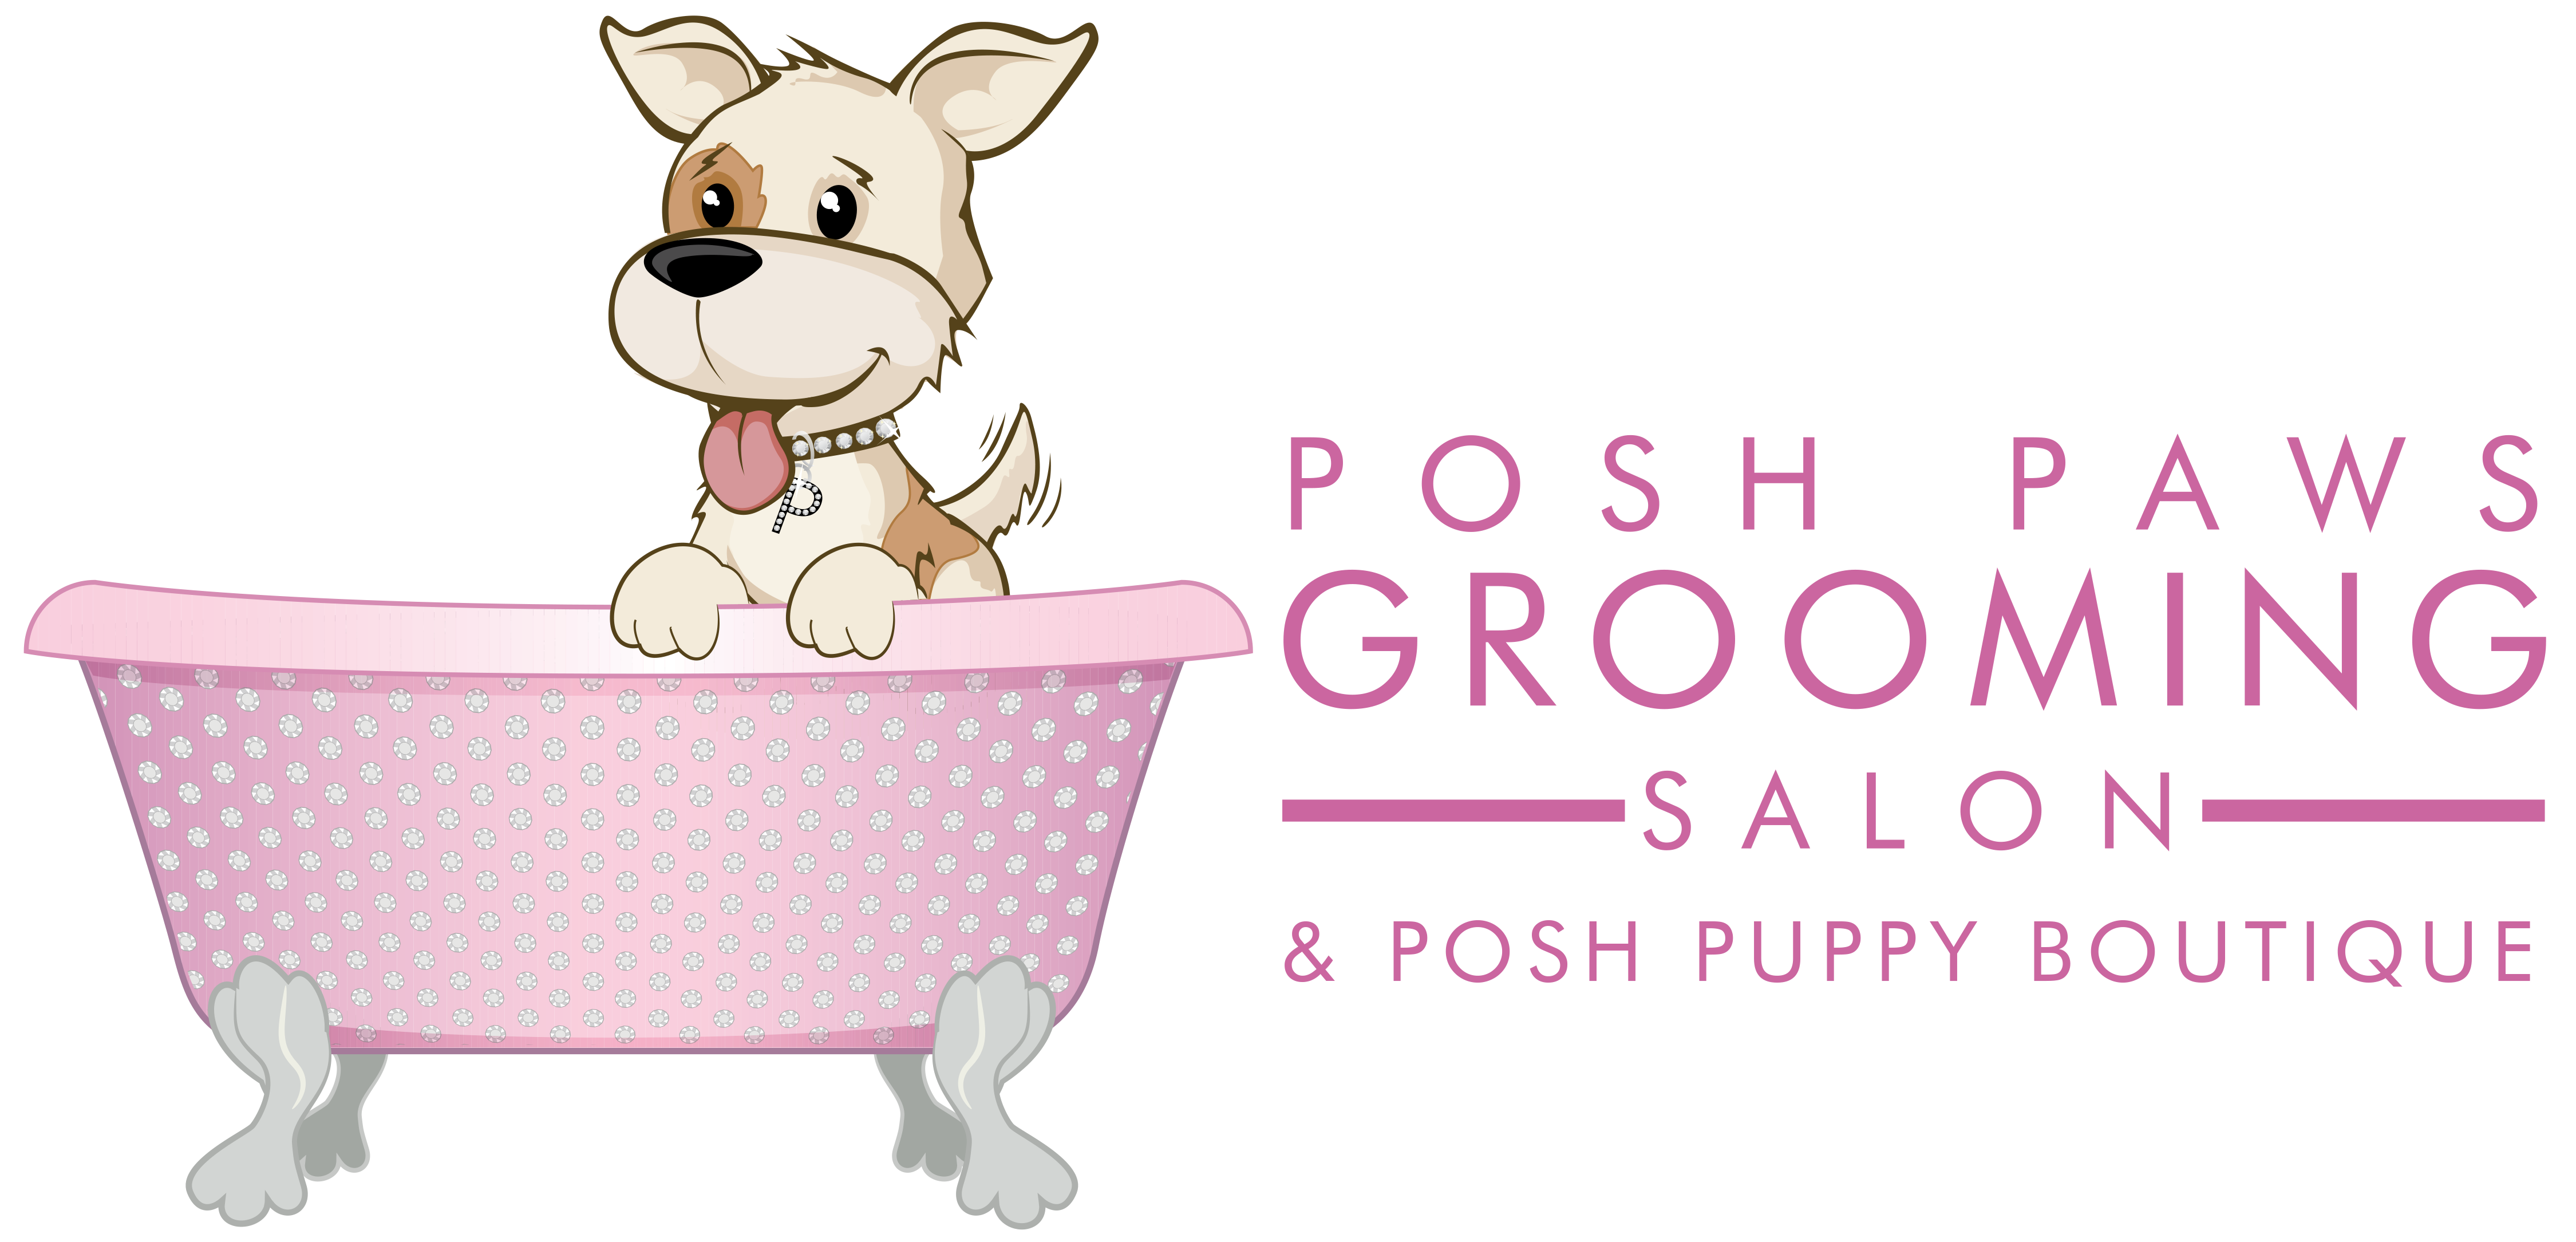 Posh Paws Grooming Salon & Posh Puppy Boutique